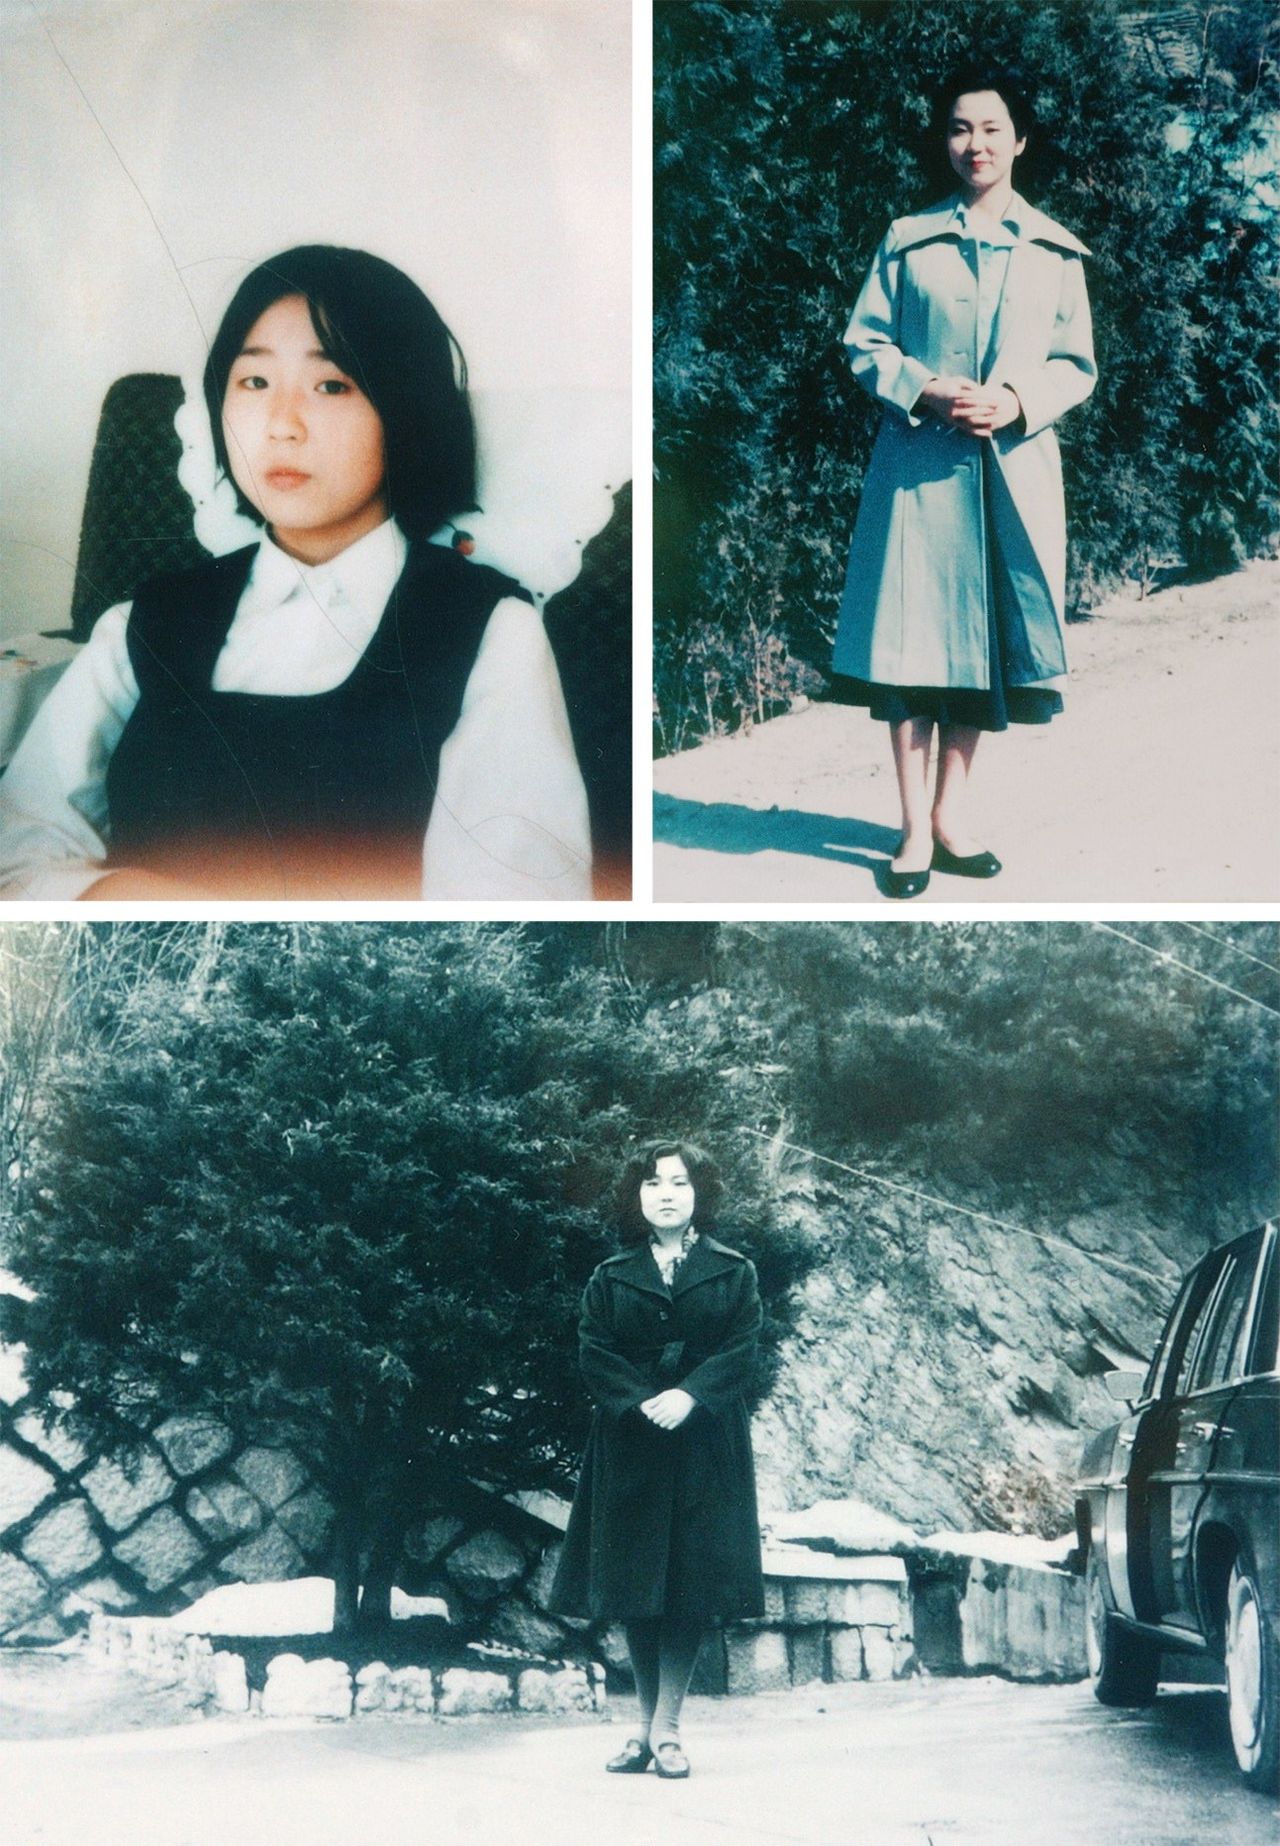 Photos of abductee Yokota Megumi in North Korea provided by Yokota Shigeru. (© Jiji)